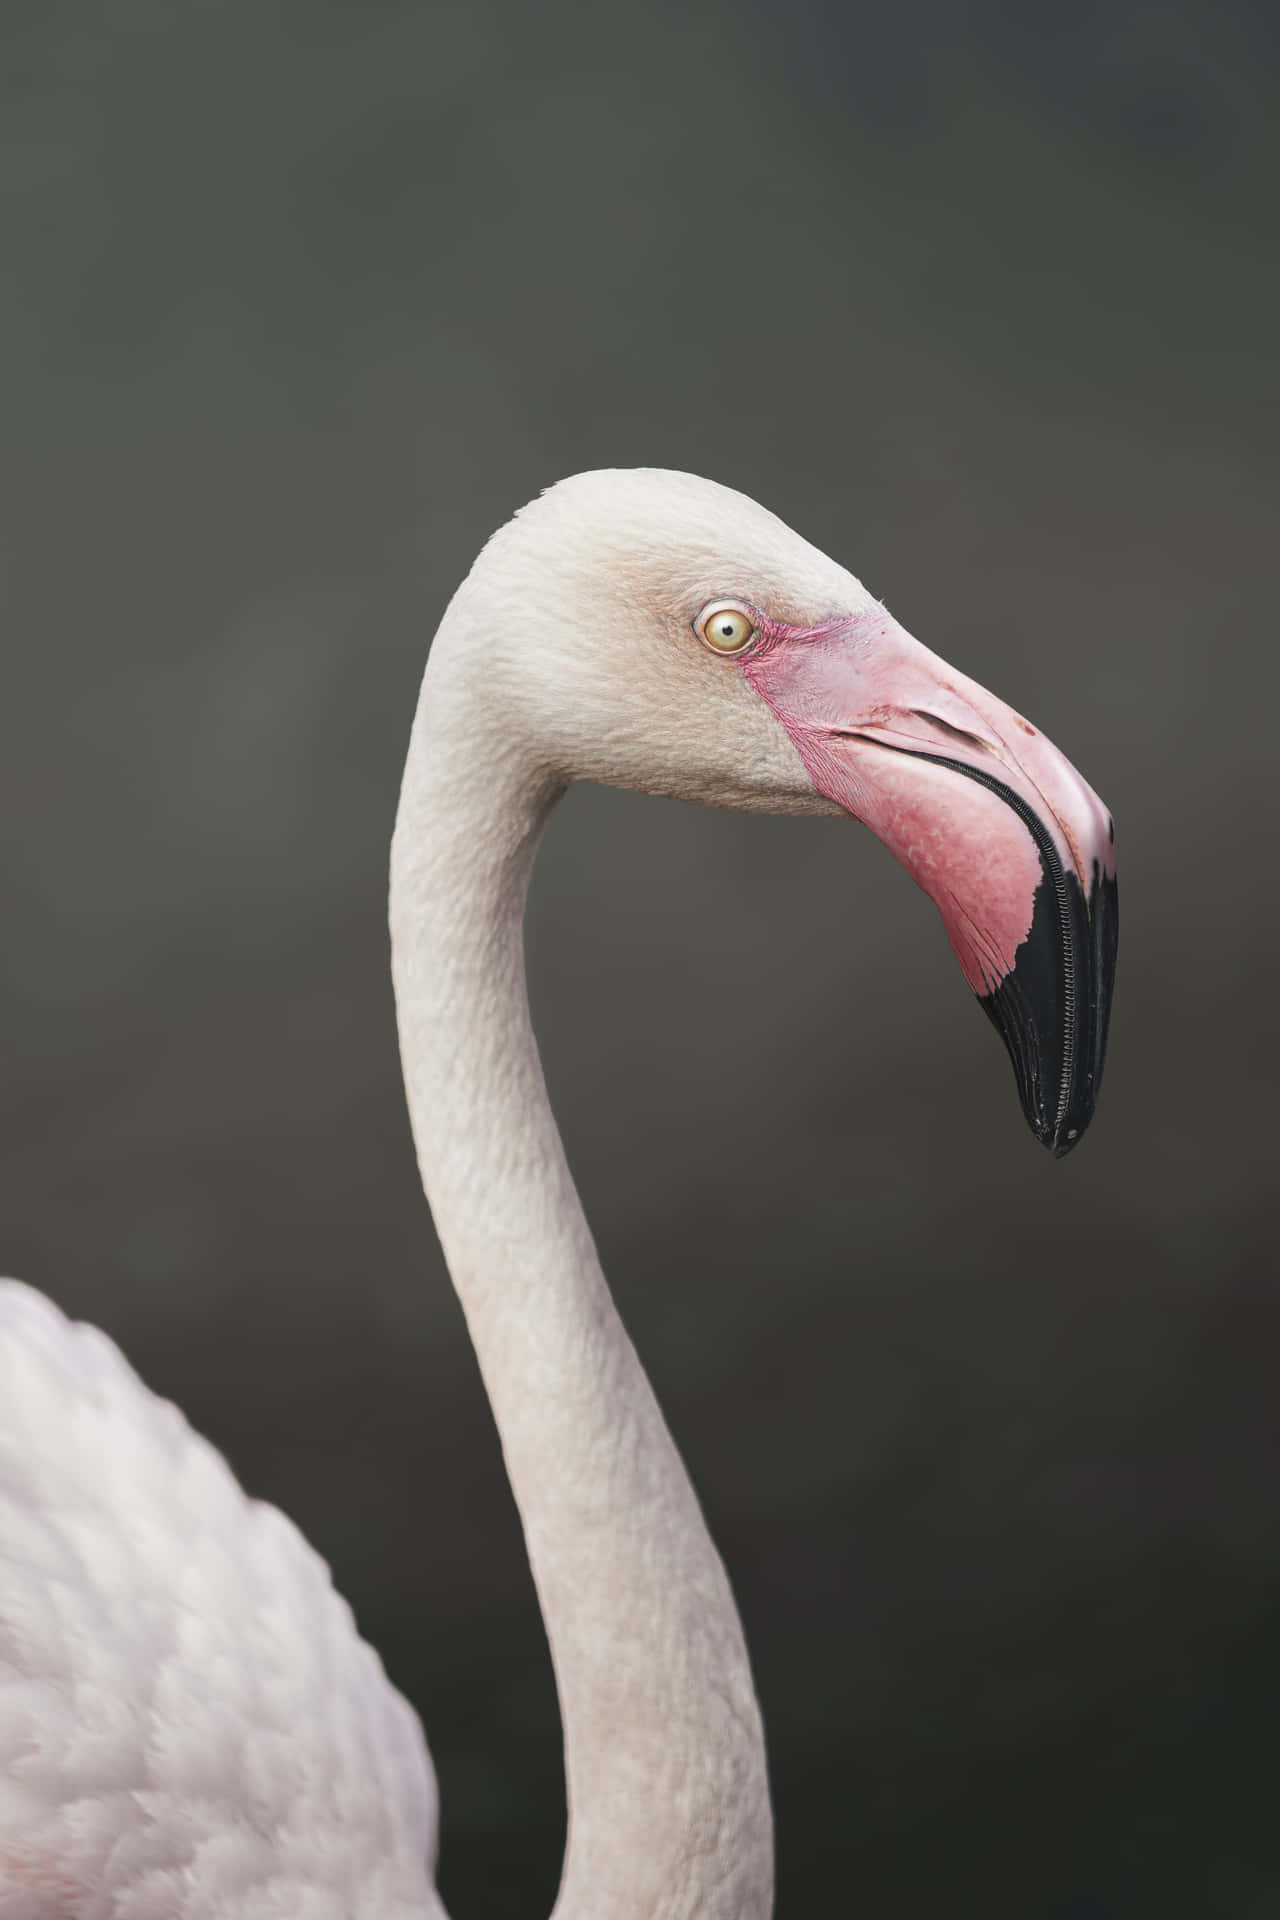 Charming Pink Flamingos Migrating In Sunlit Sky – A Captivating Natural Phenomenon